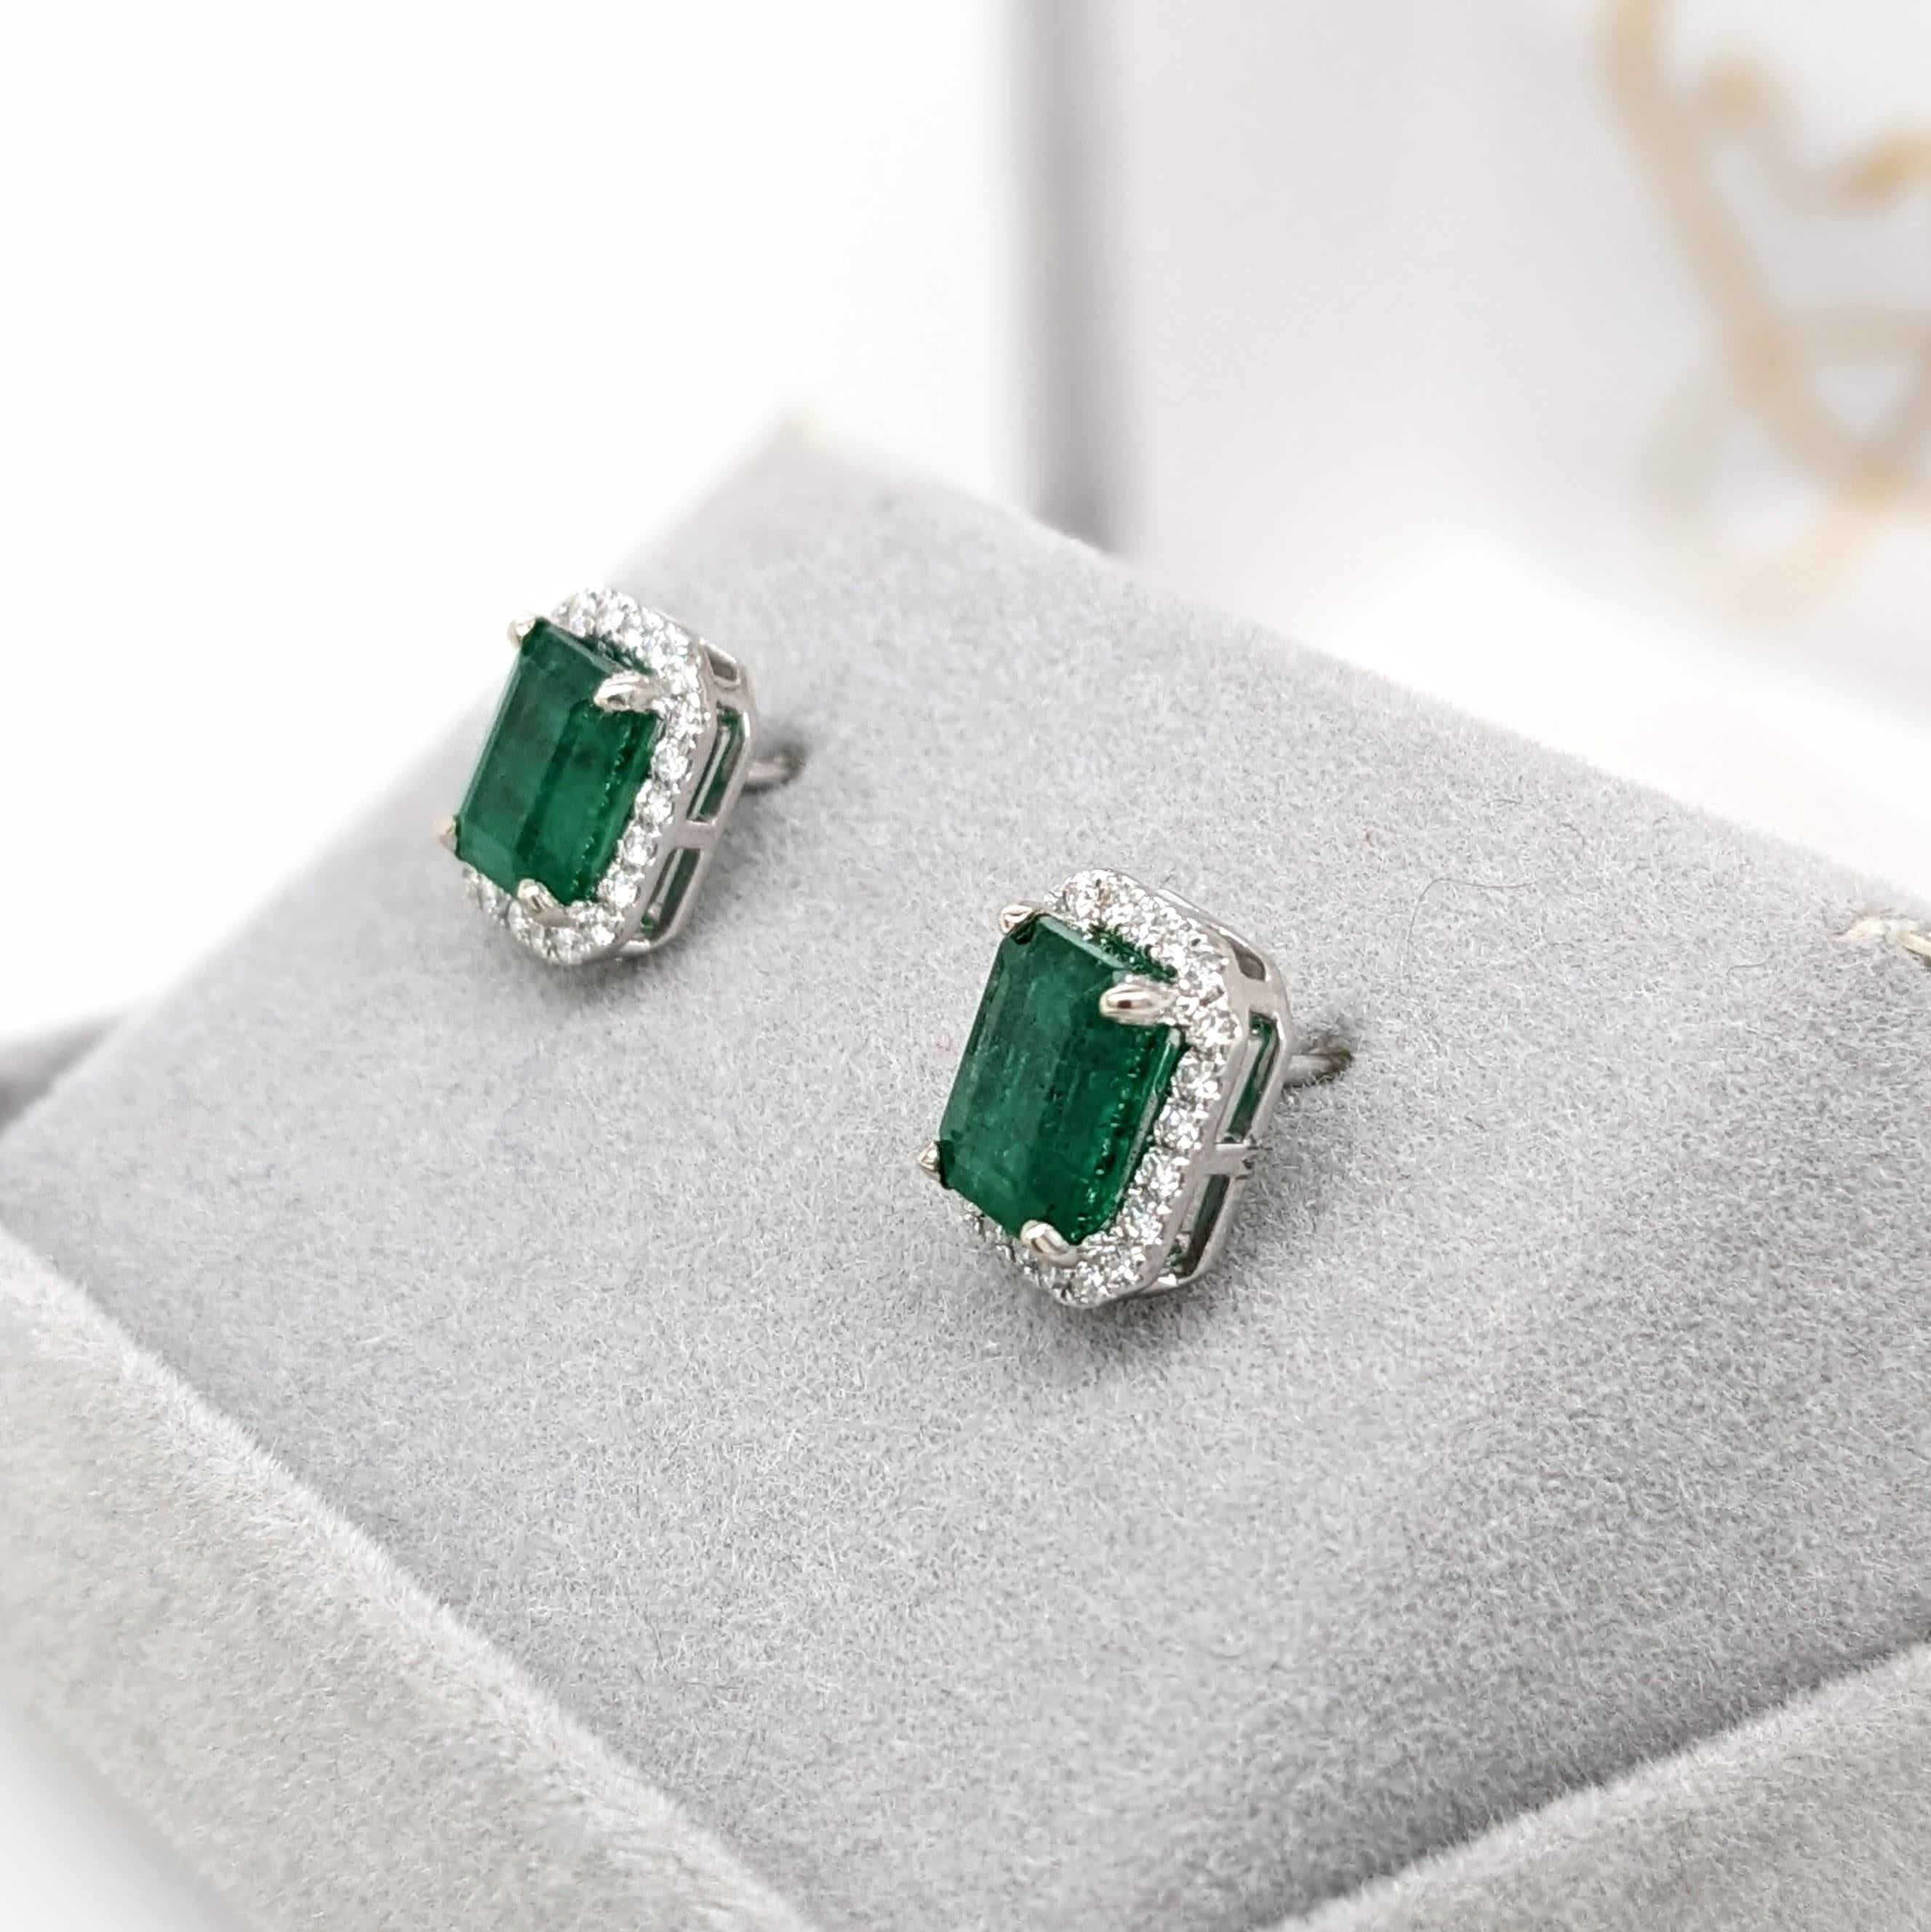 2.3ct Zambian Emerald Stud Earrings w Natural Diamond Halo in Solid 14K Gold 7x5